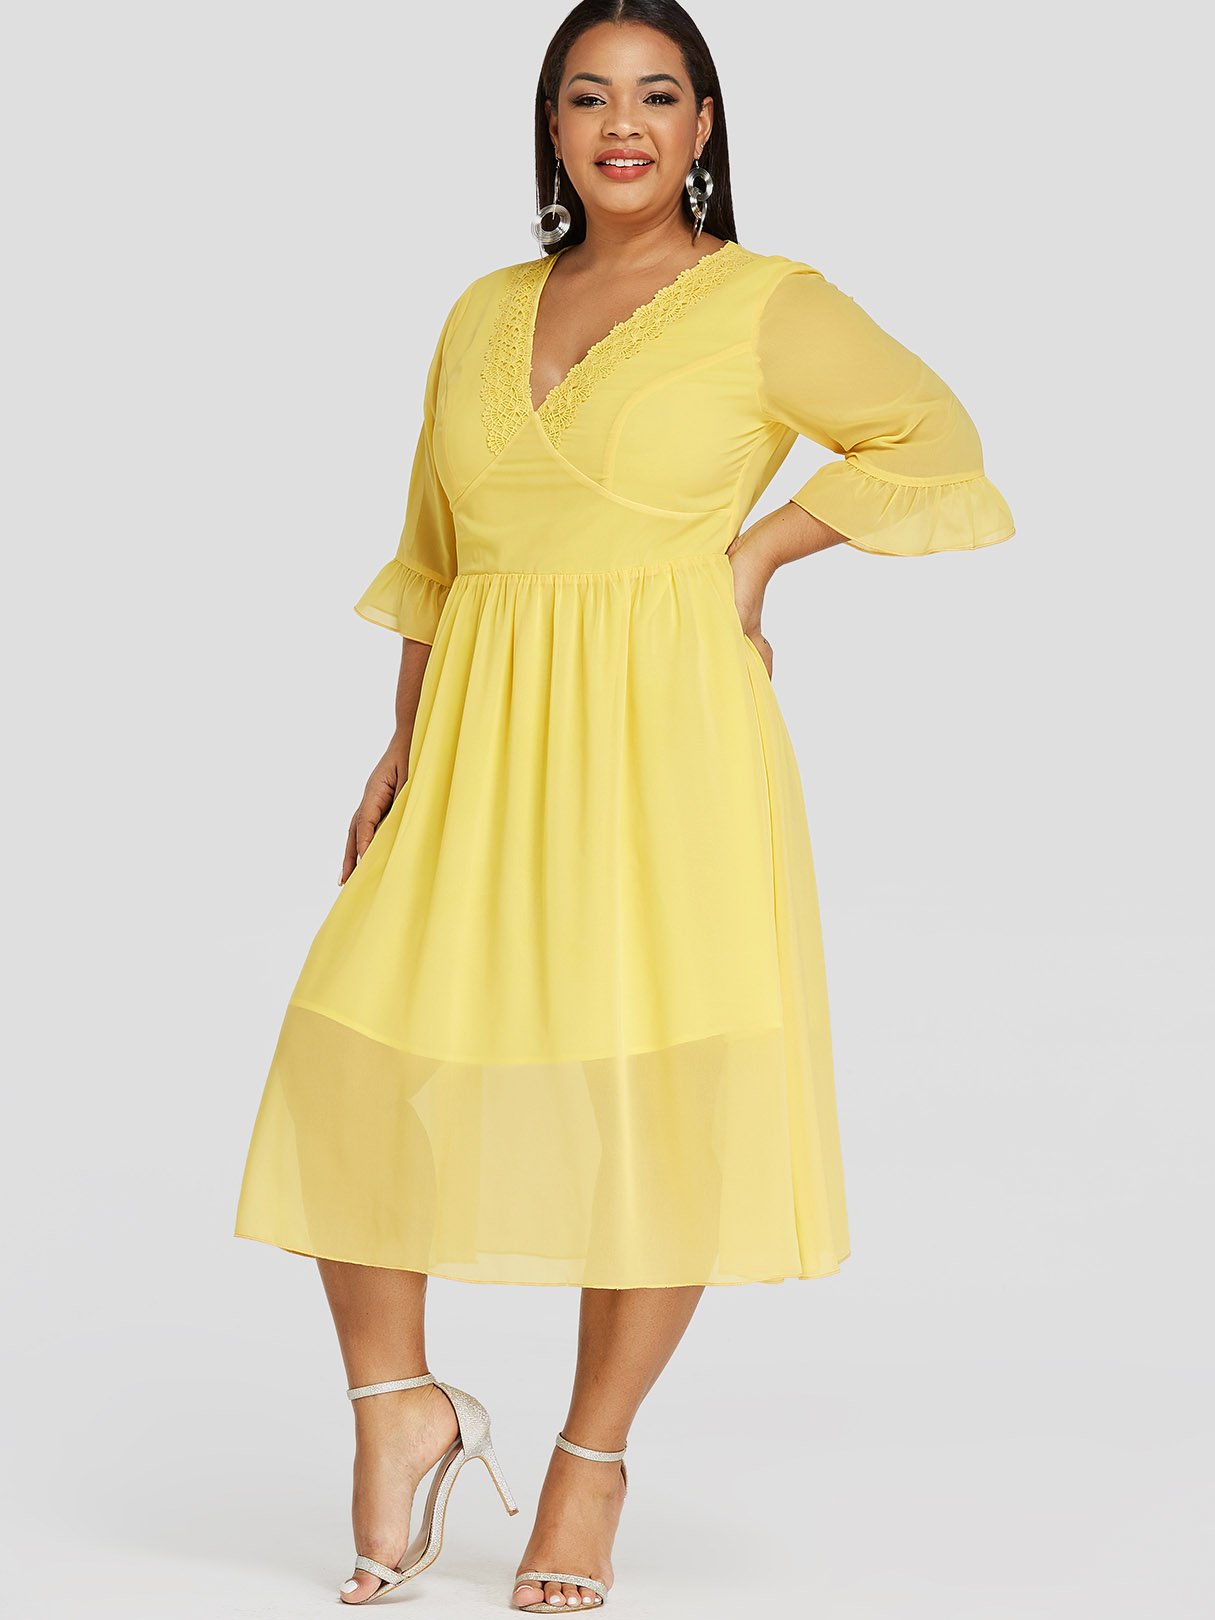 Wholesale Deep V Neck Plain Crochet Lace Embellished Double Layer Half Sleeve Yellow Plus Size Dress